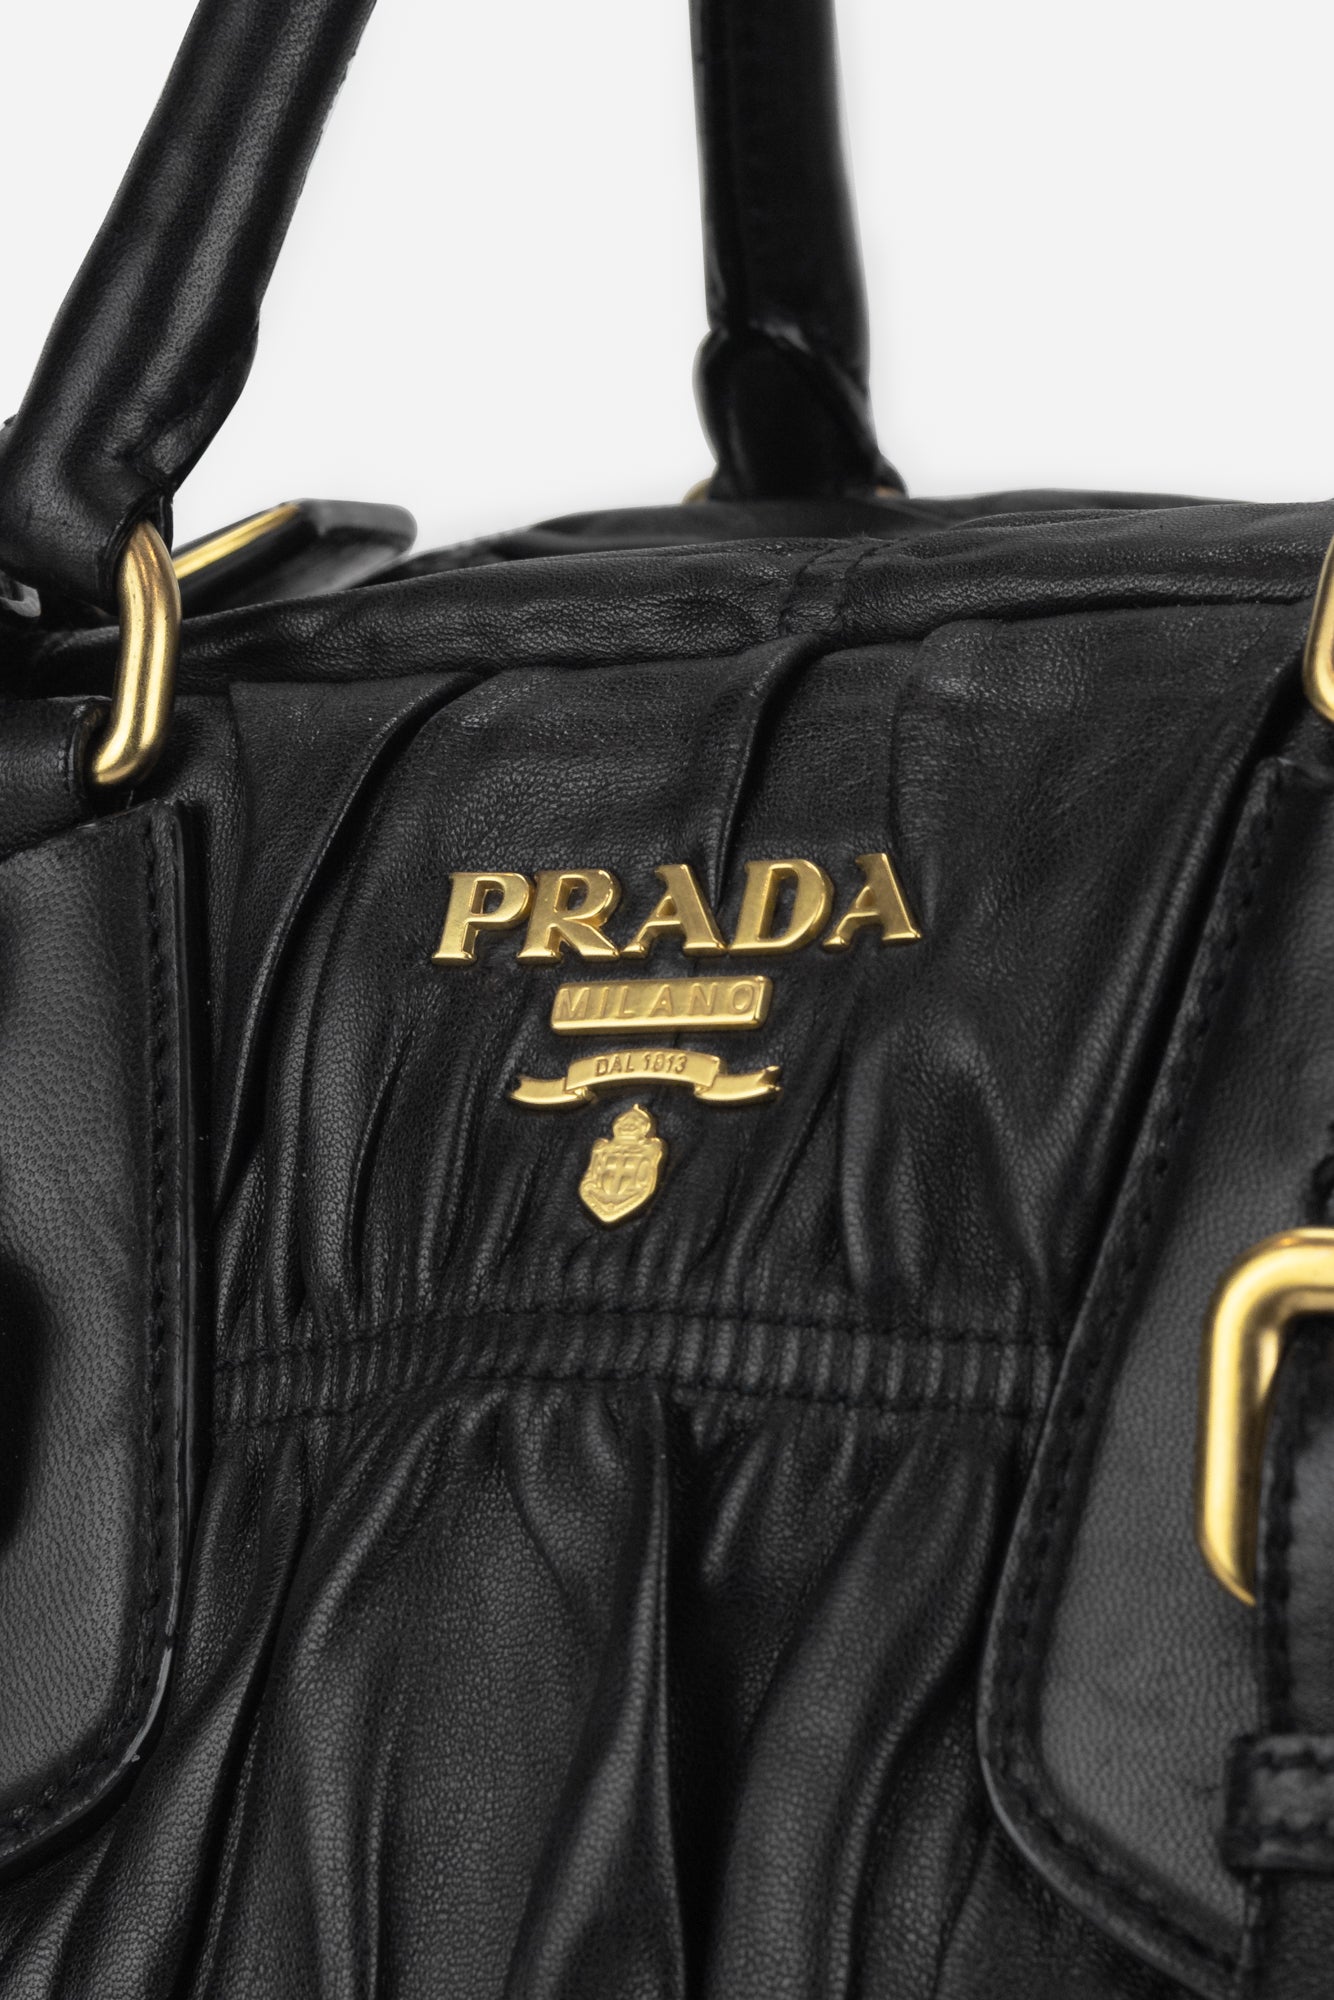 Black Leather Gaufre Top Handle Bag